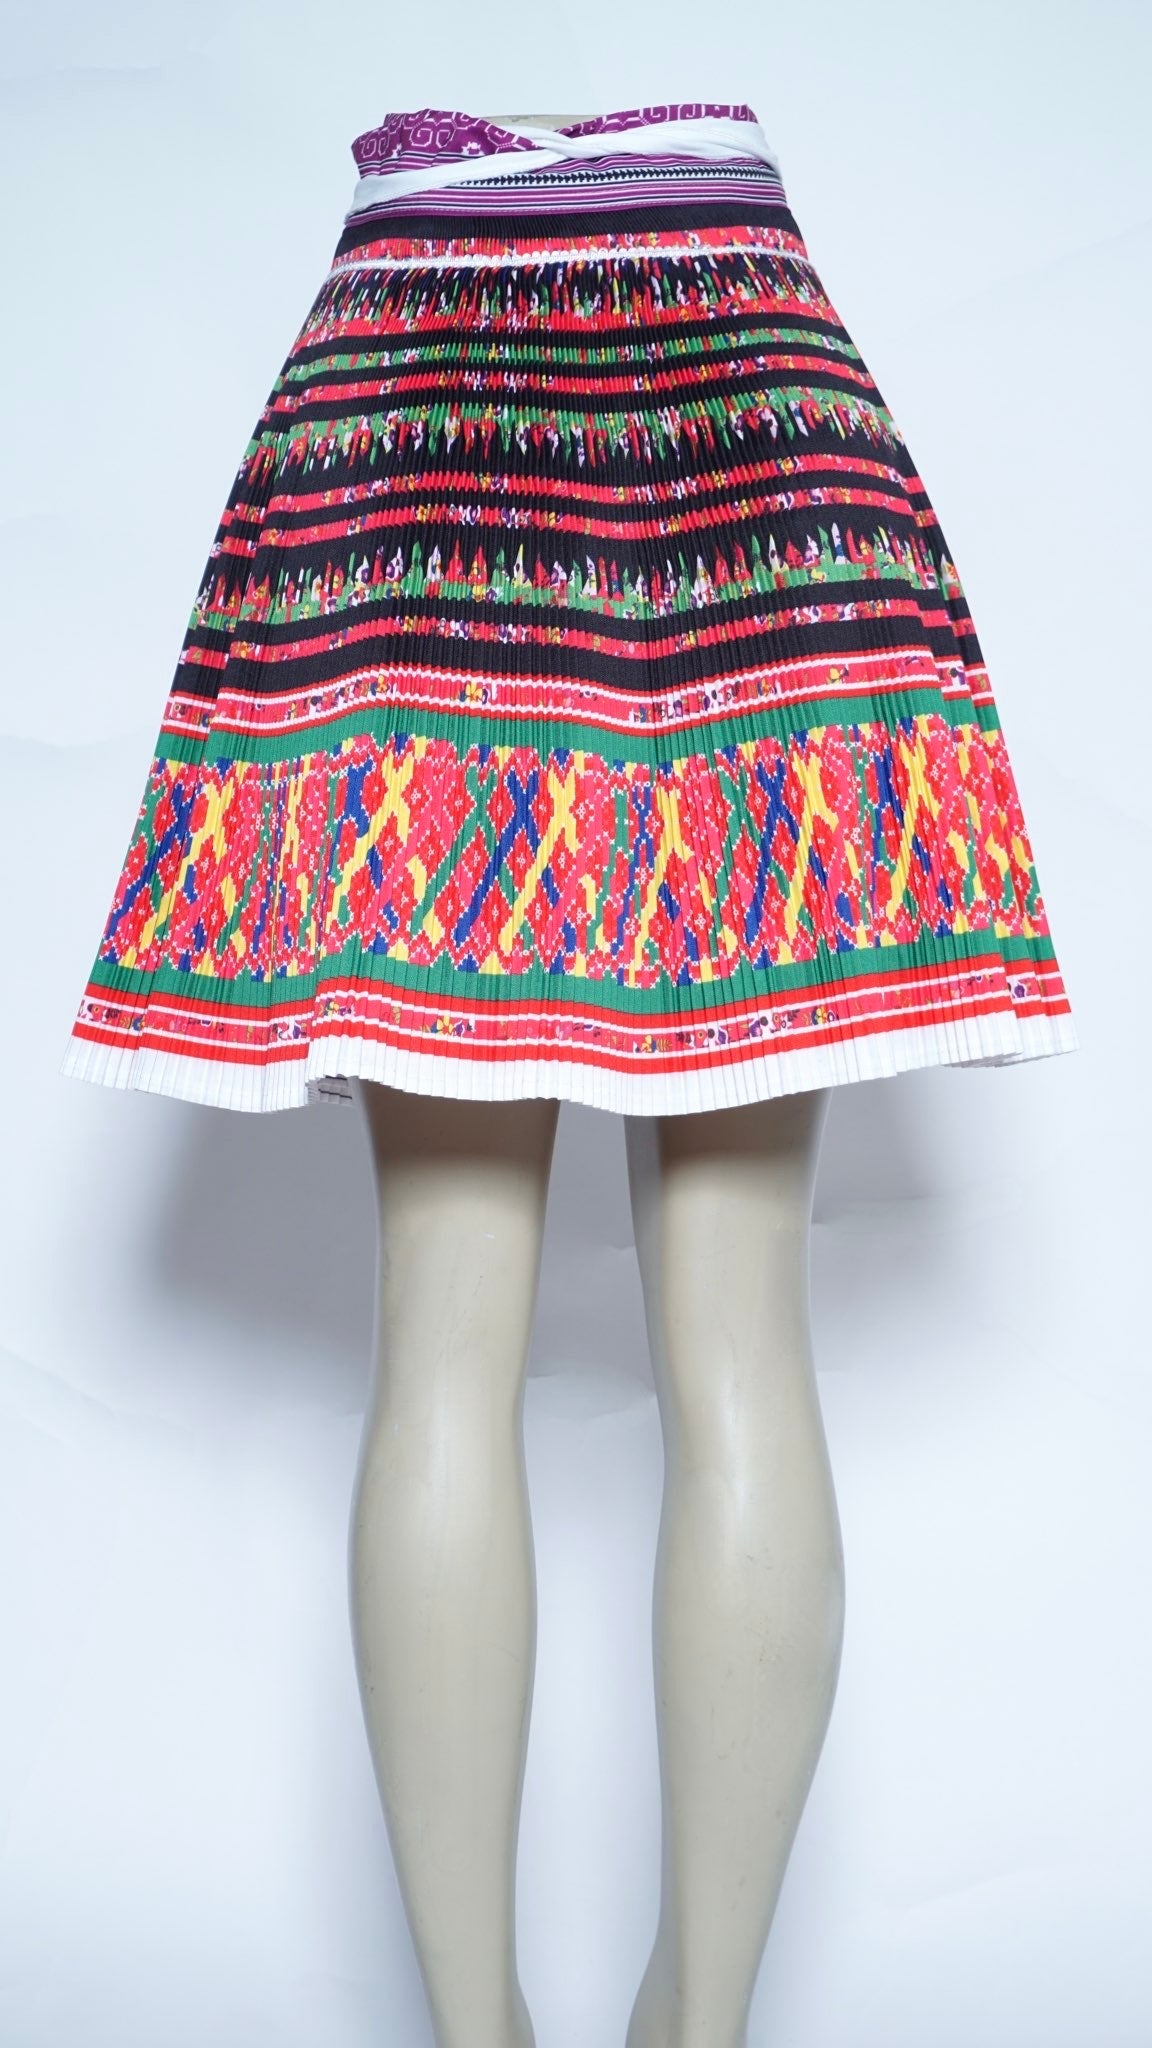 Printed X Floral Patterns Skirt (40x21)